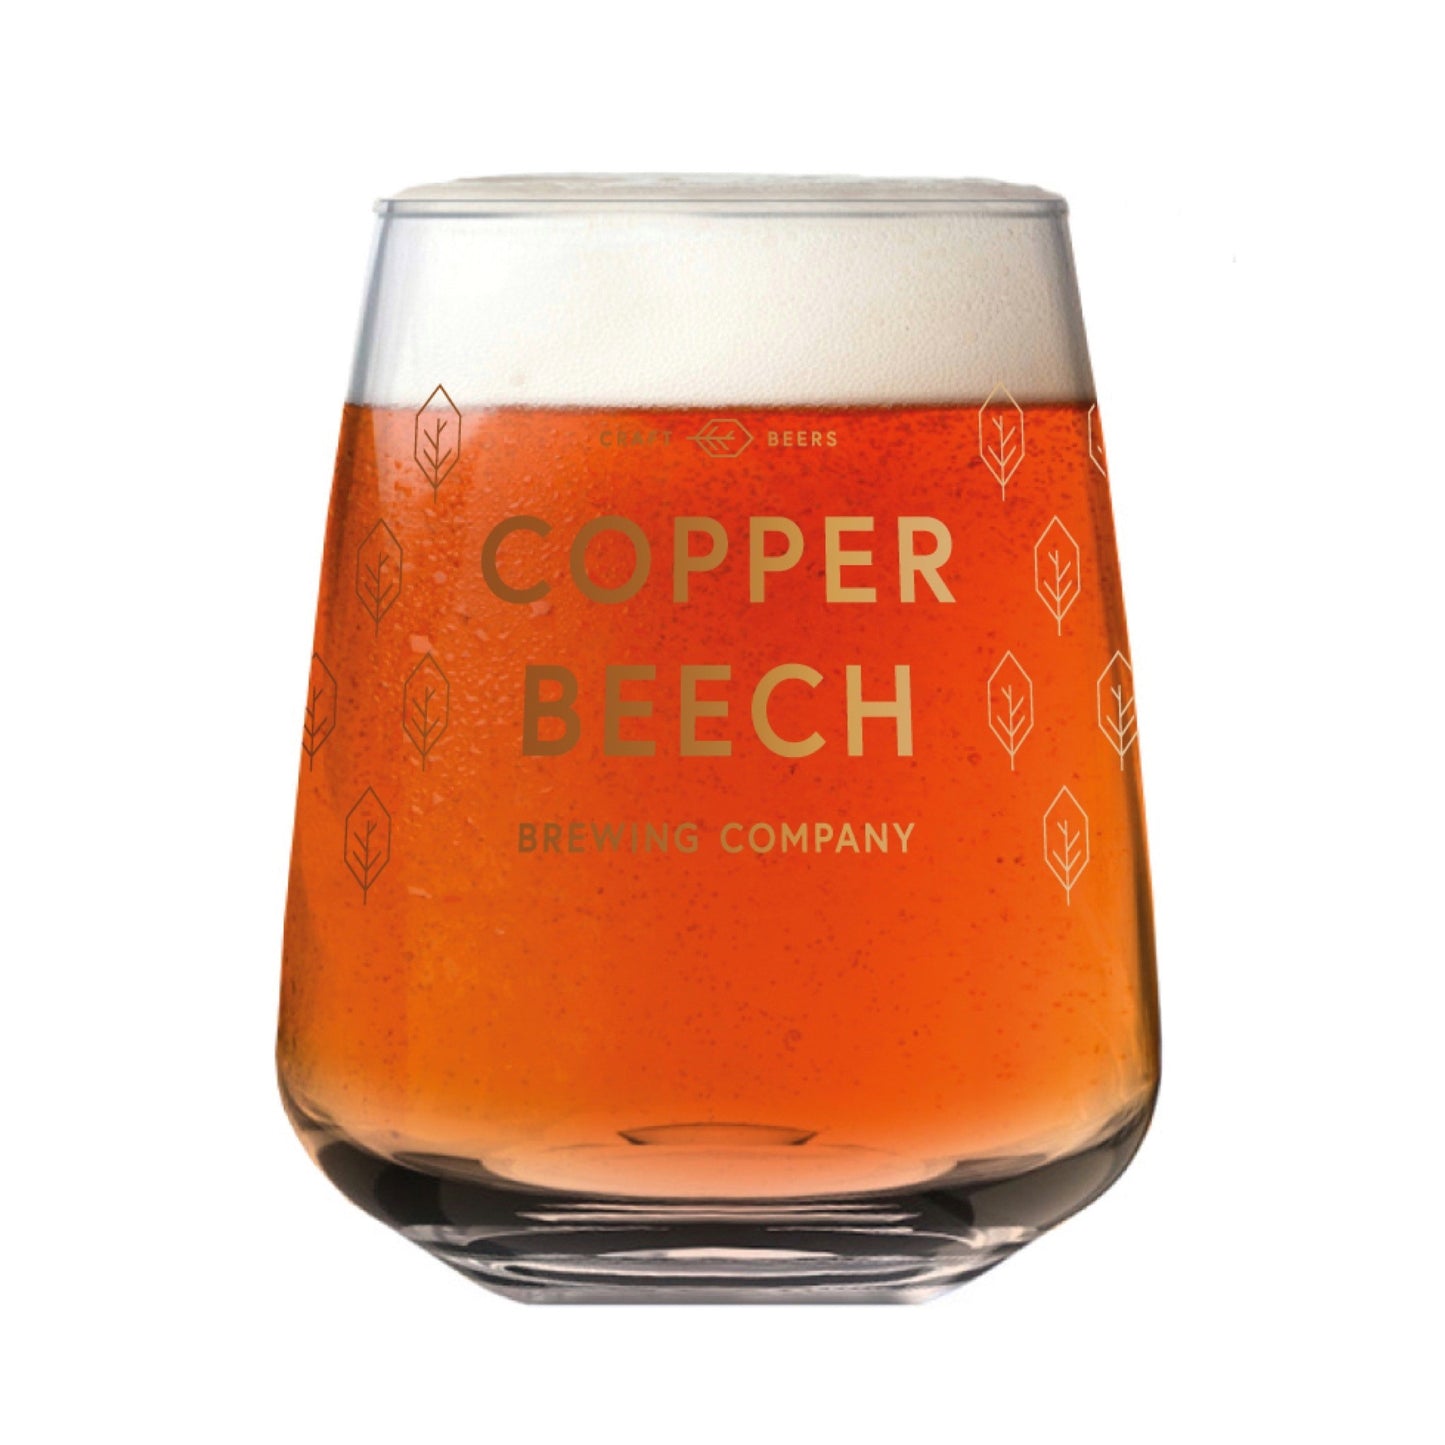 Copper Beech Branded Glassware